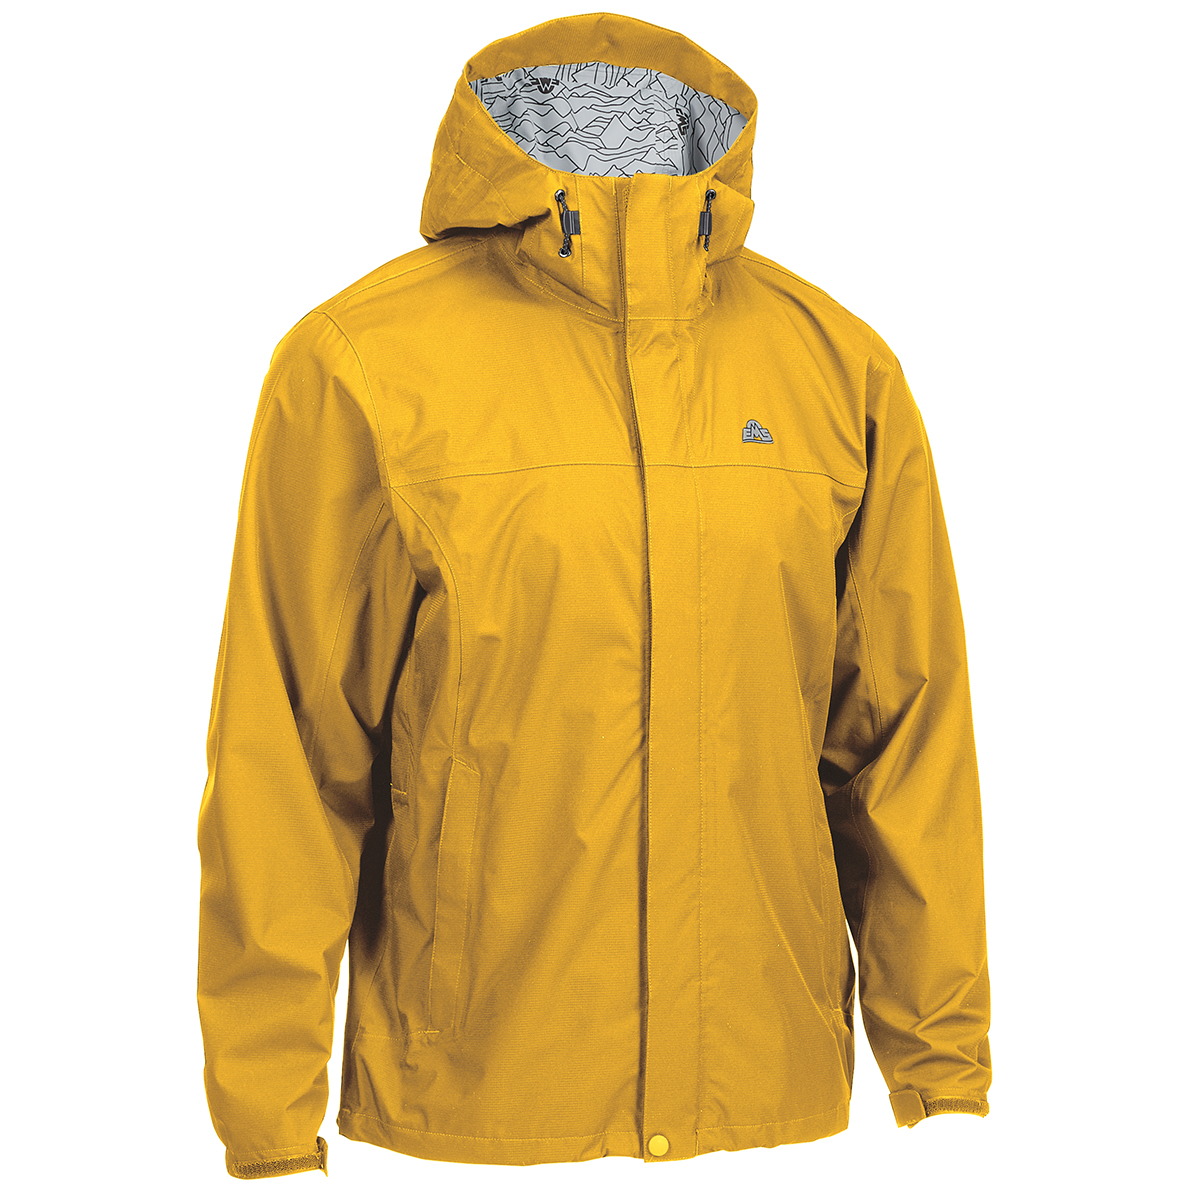 Ems Men's Thunderhead Peak Rain Jacket - Yellow, M